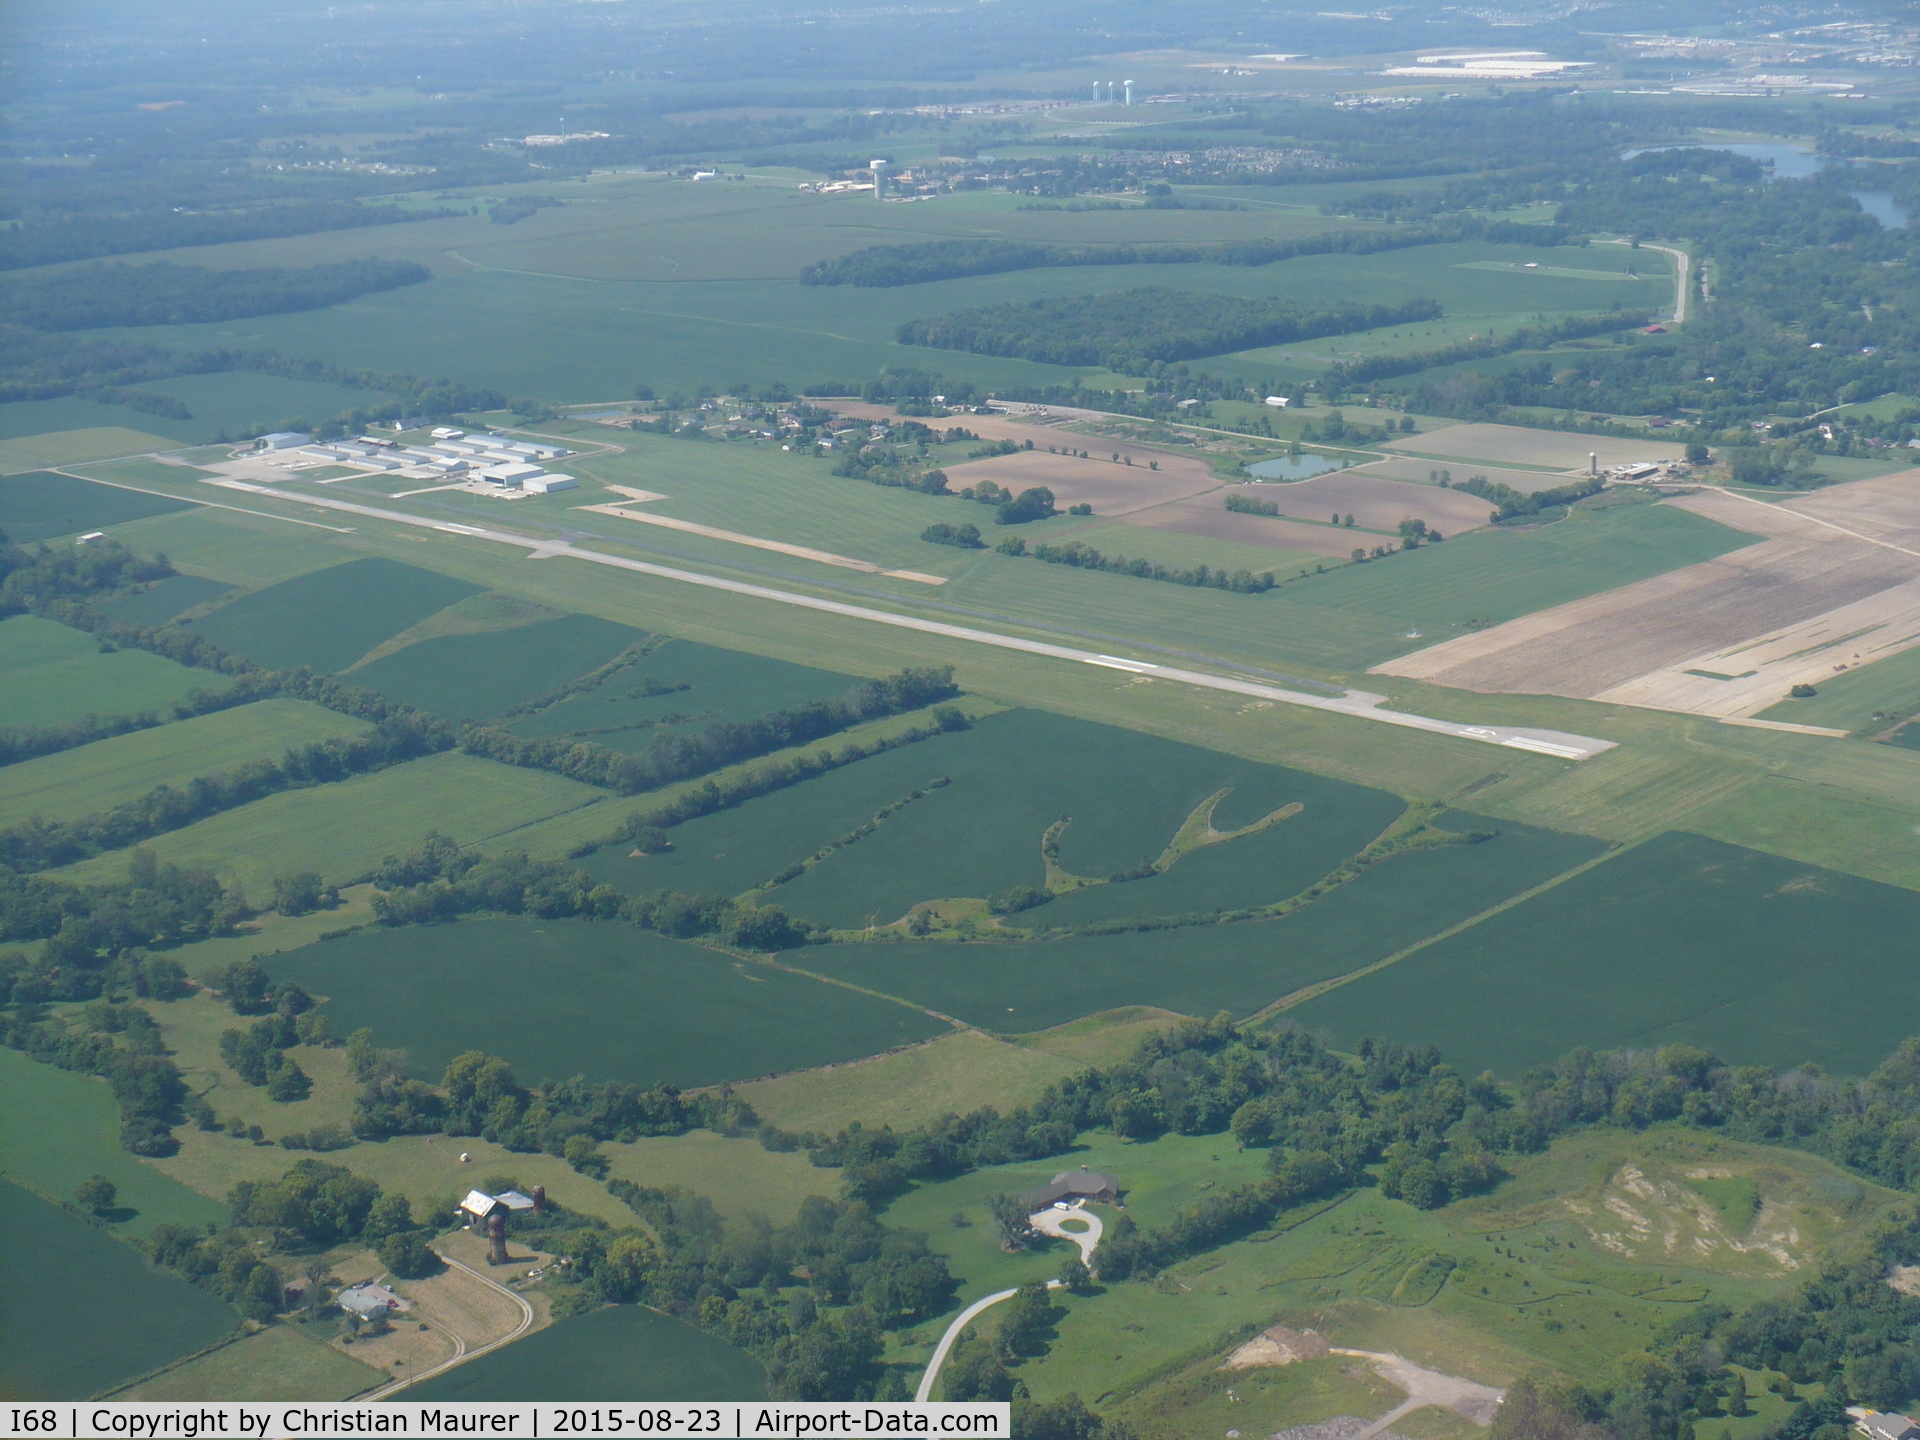 Warren County/john Lane Field Airport (I68) - Warren County Airport